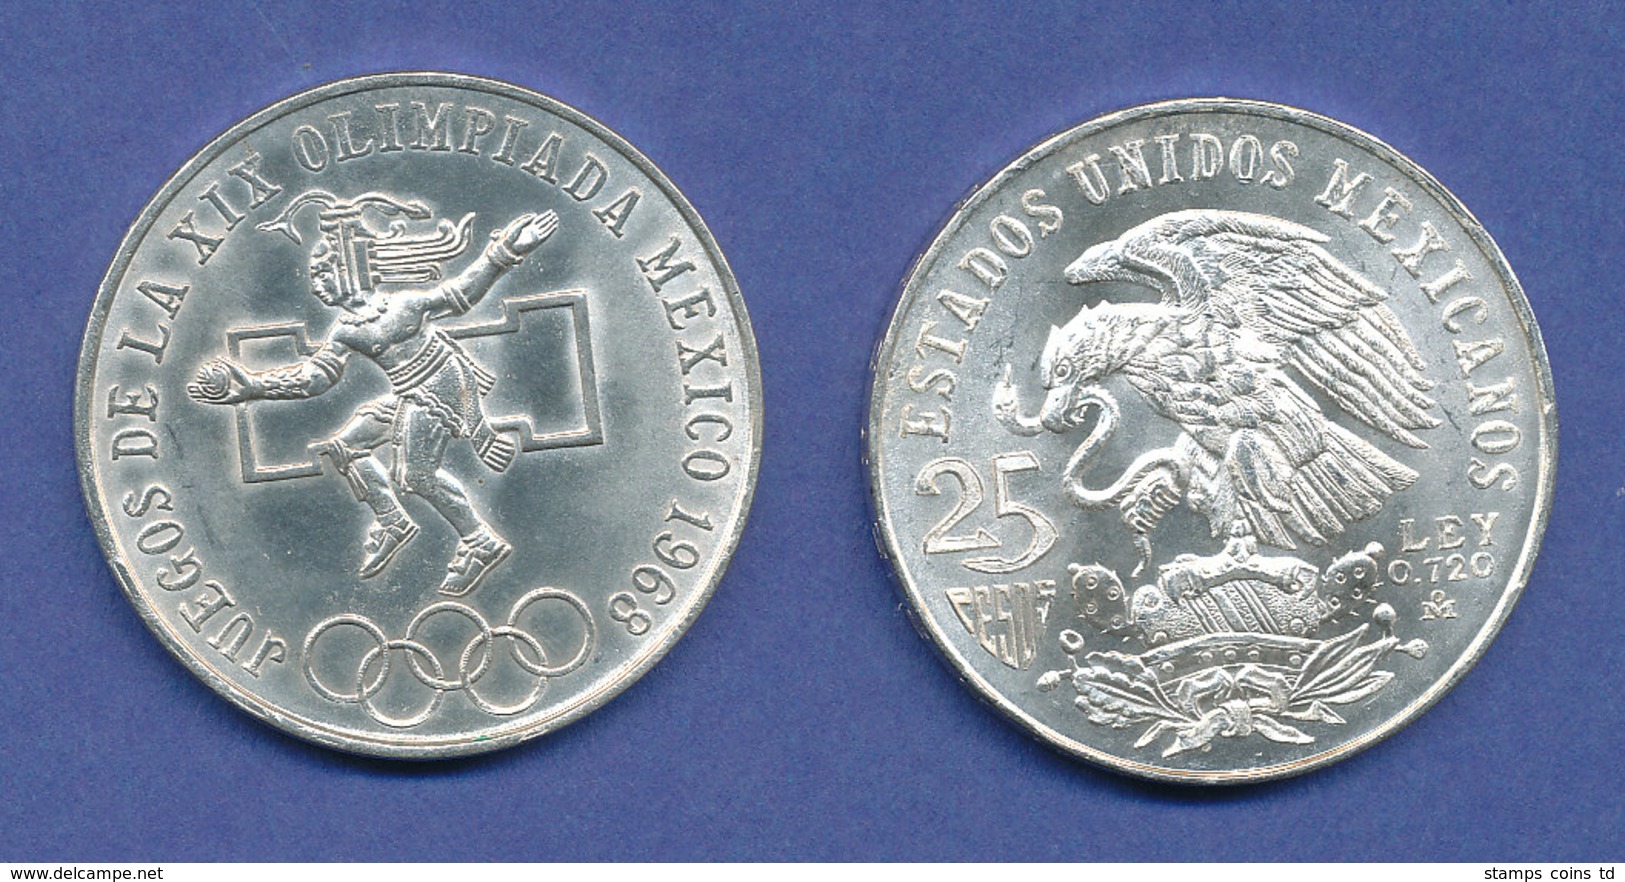 Mexiko Silber-Münze Olympische Spiele Mexico-City 1968, 22,5g 720er Silber - Messico